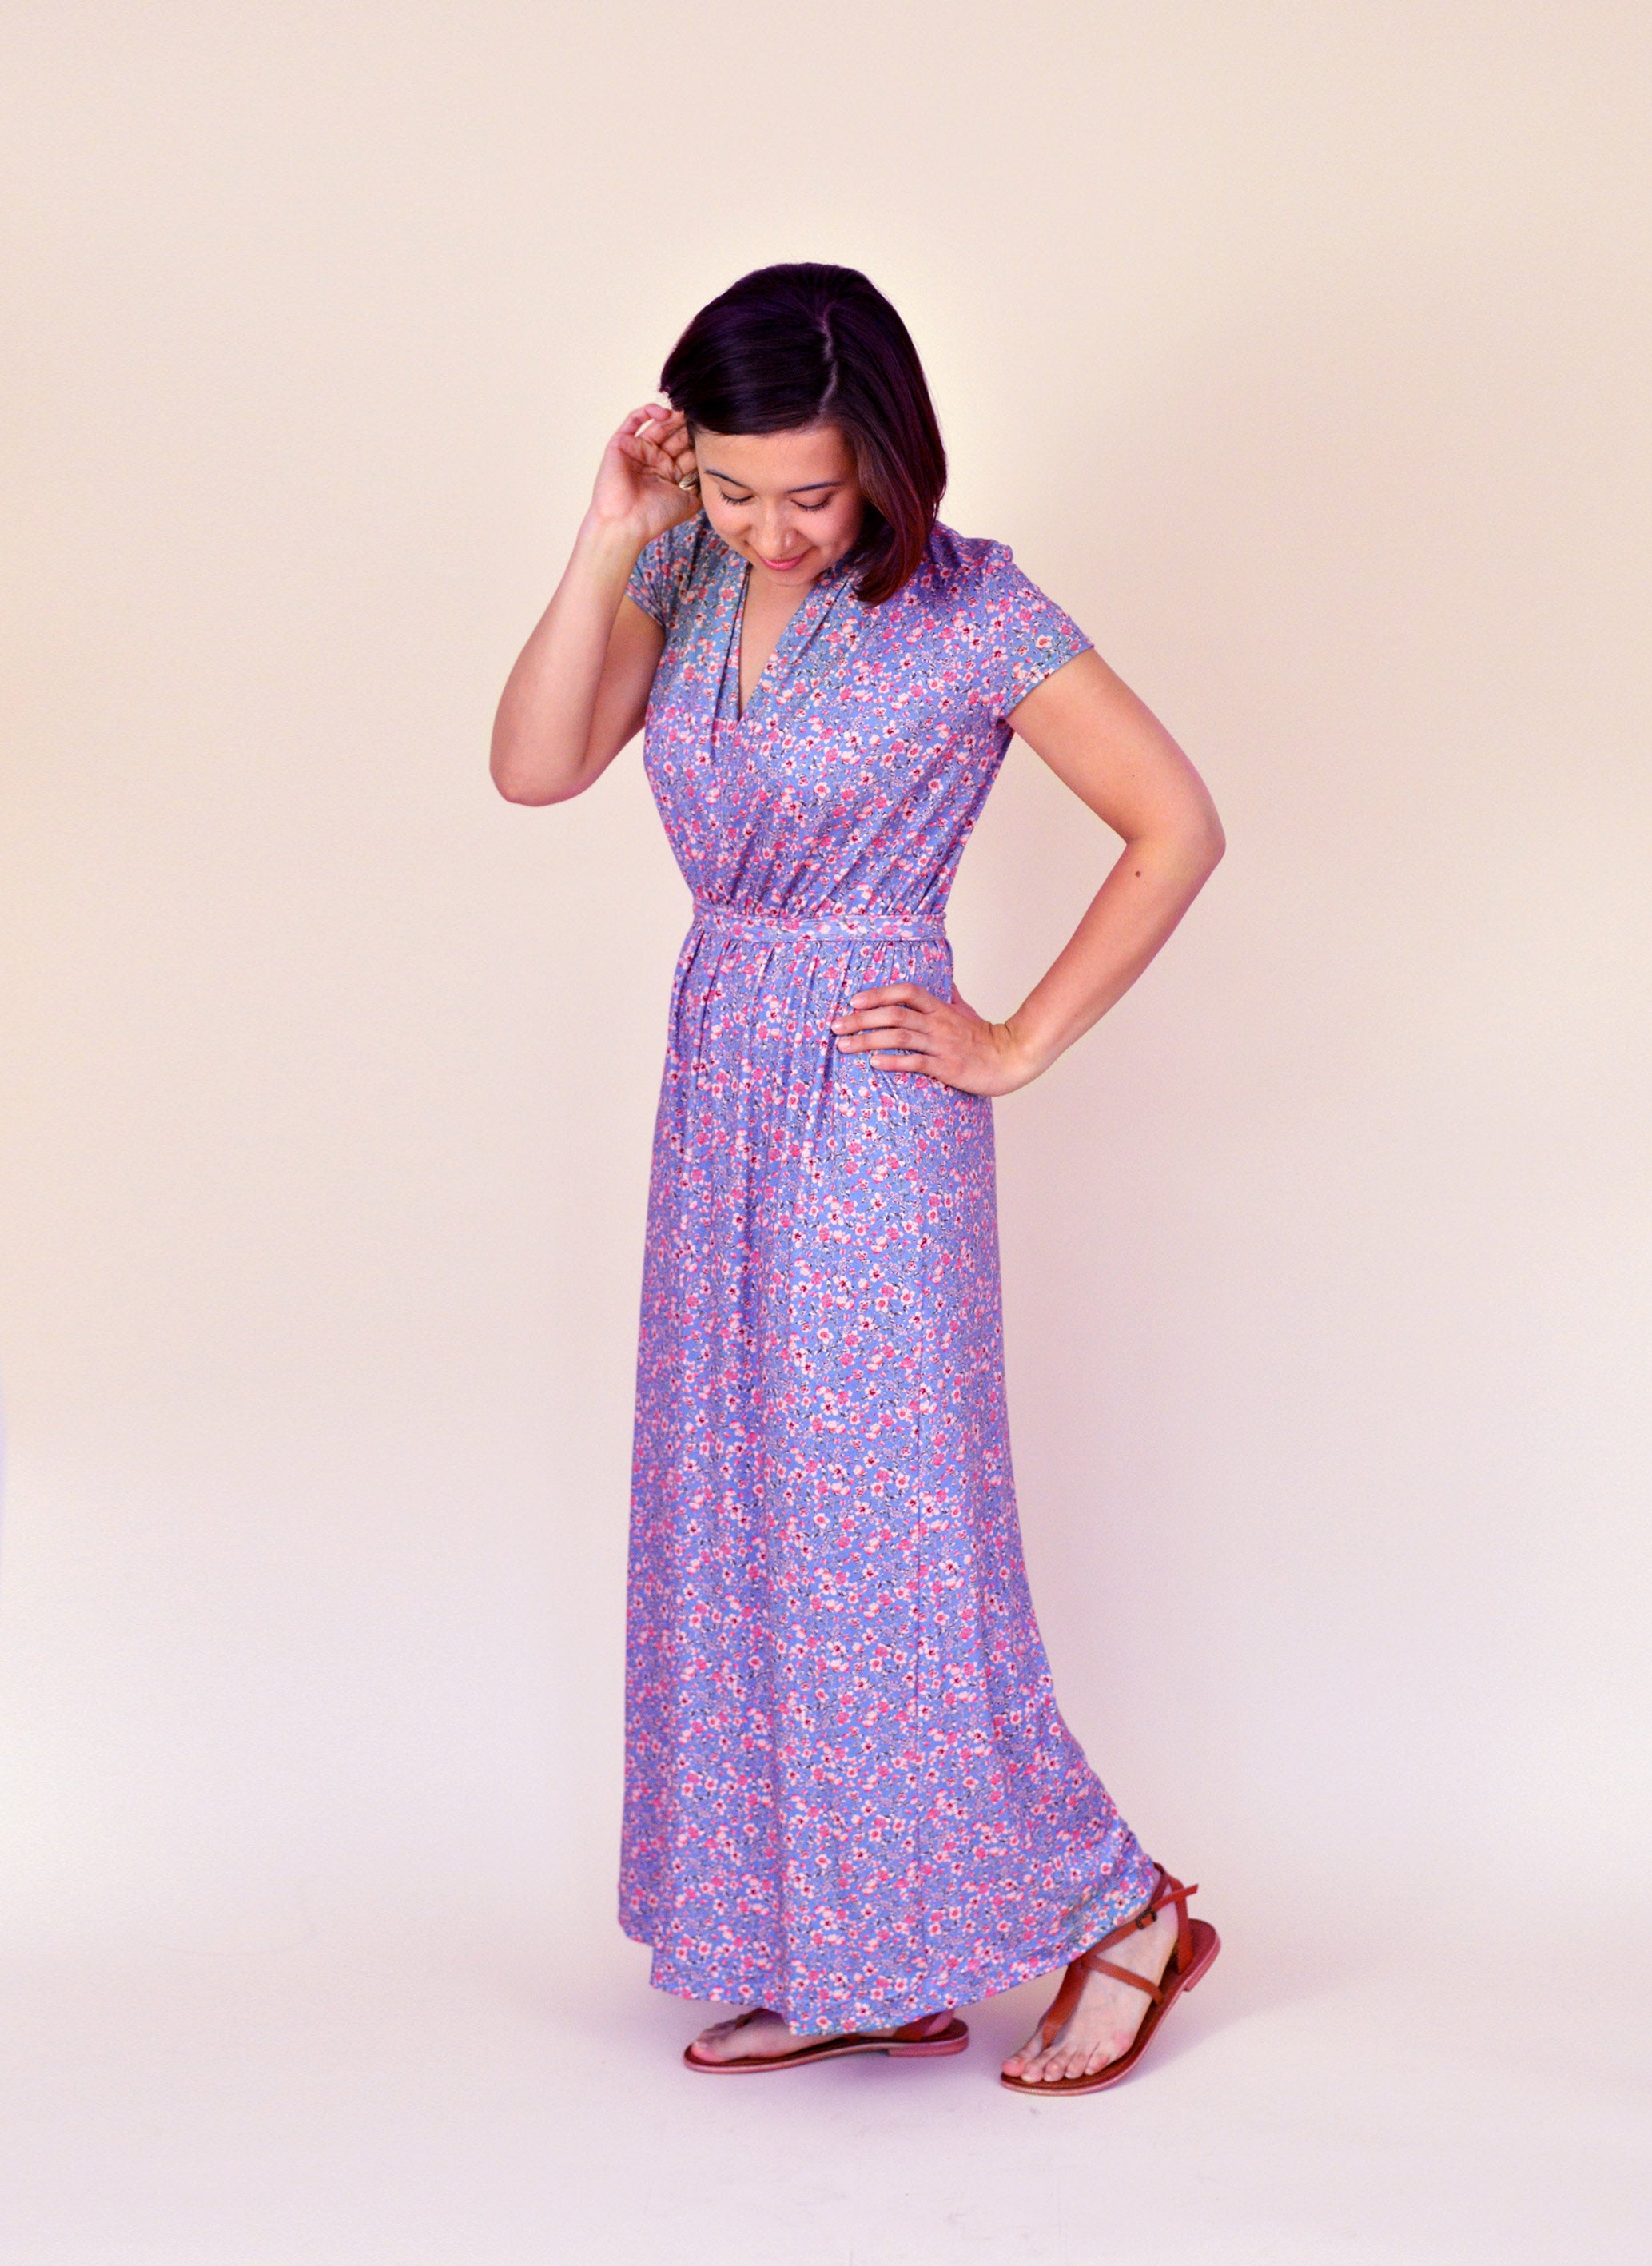 NINA LEE Mayfair Dress Sewing Pattern